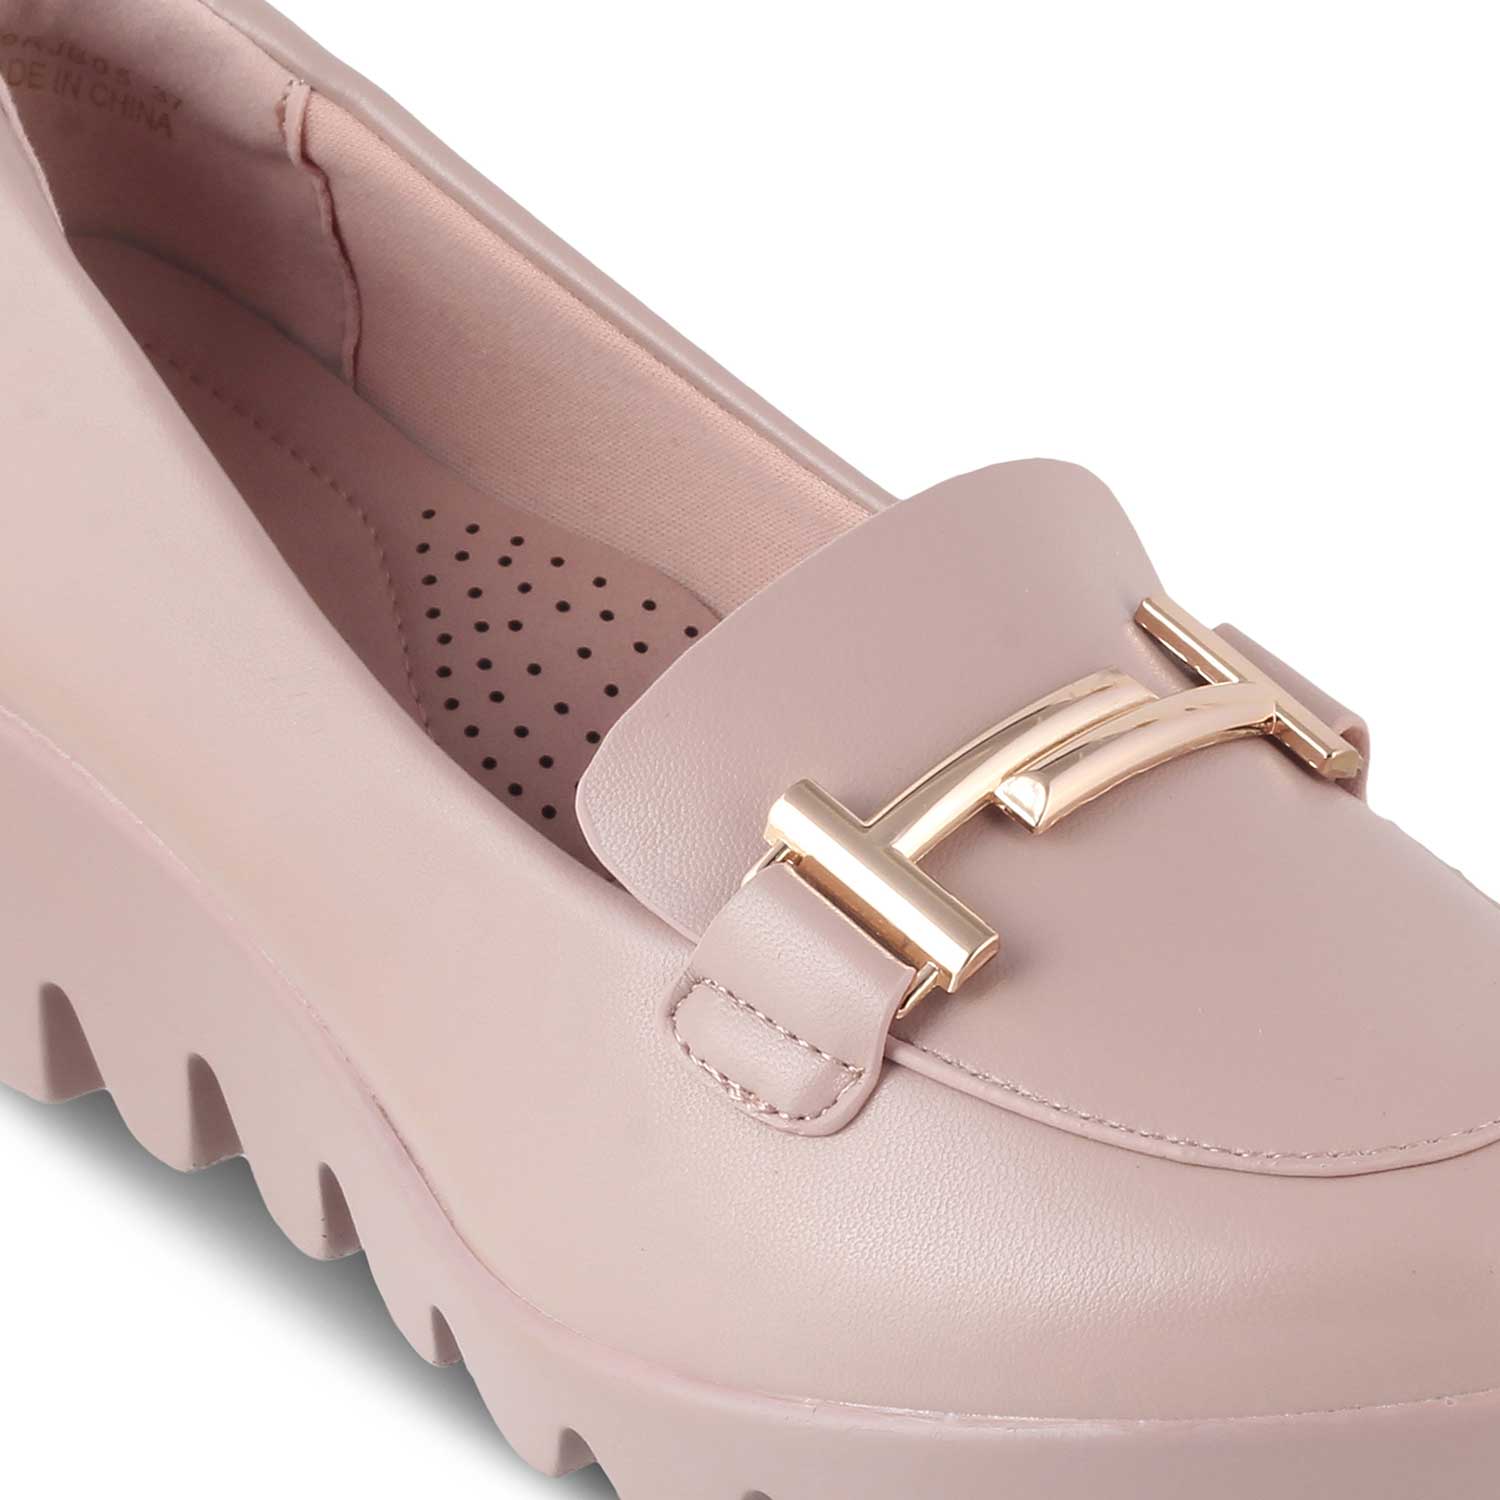 The Rocksound Pink Women's Dress Wedge Sandals Tresmode